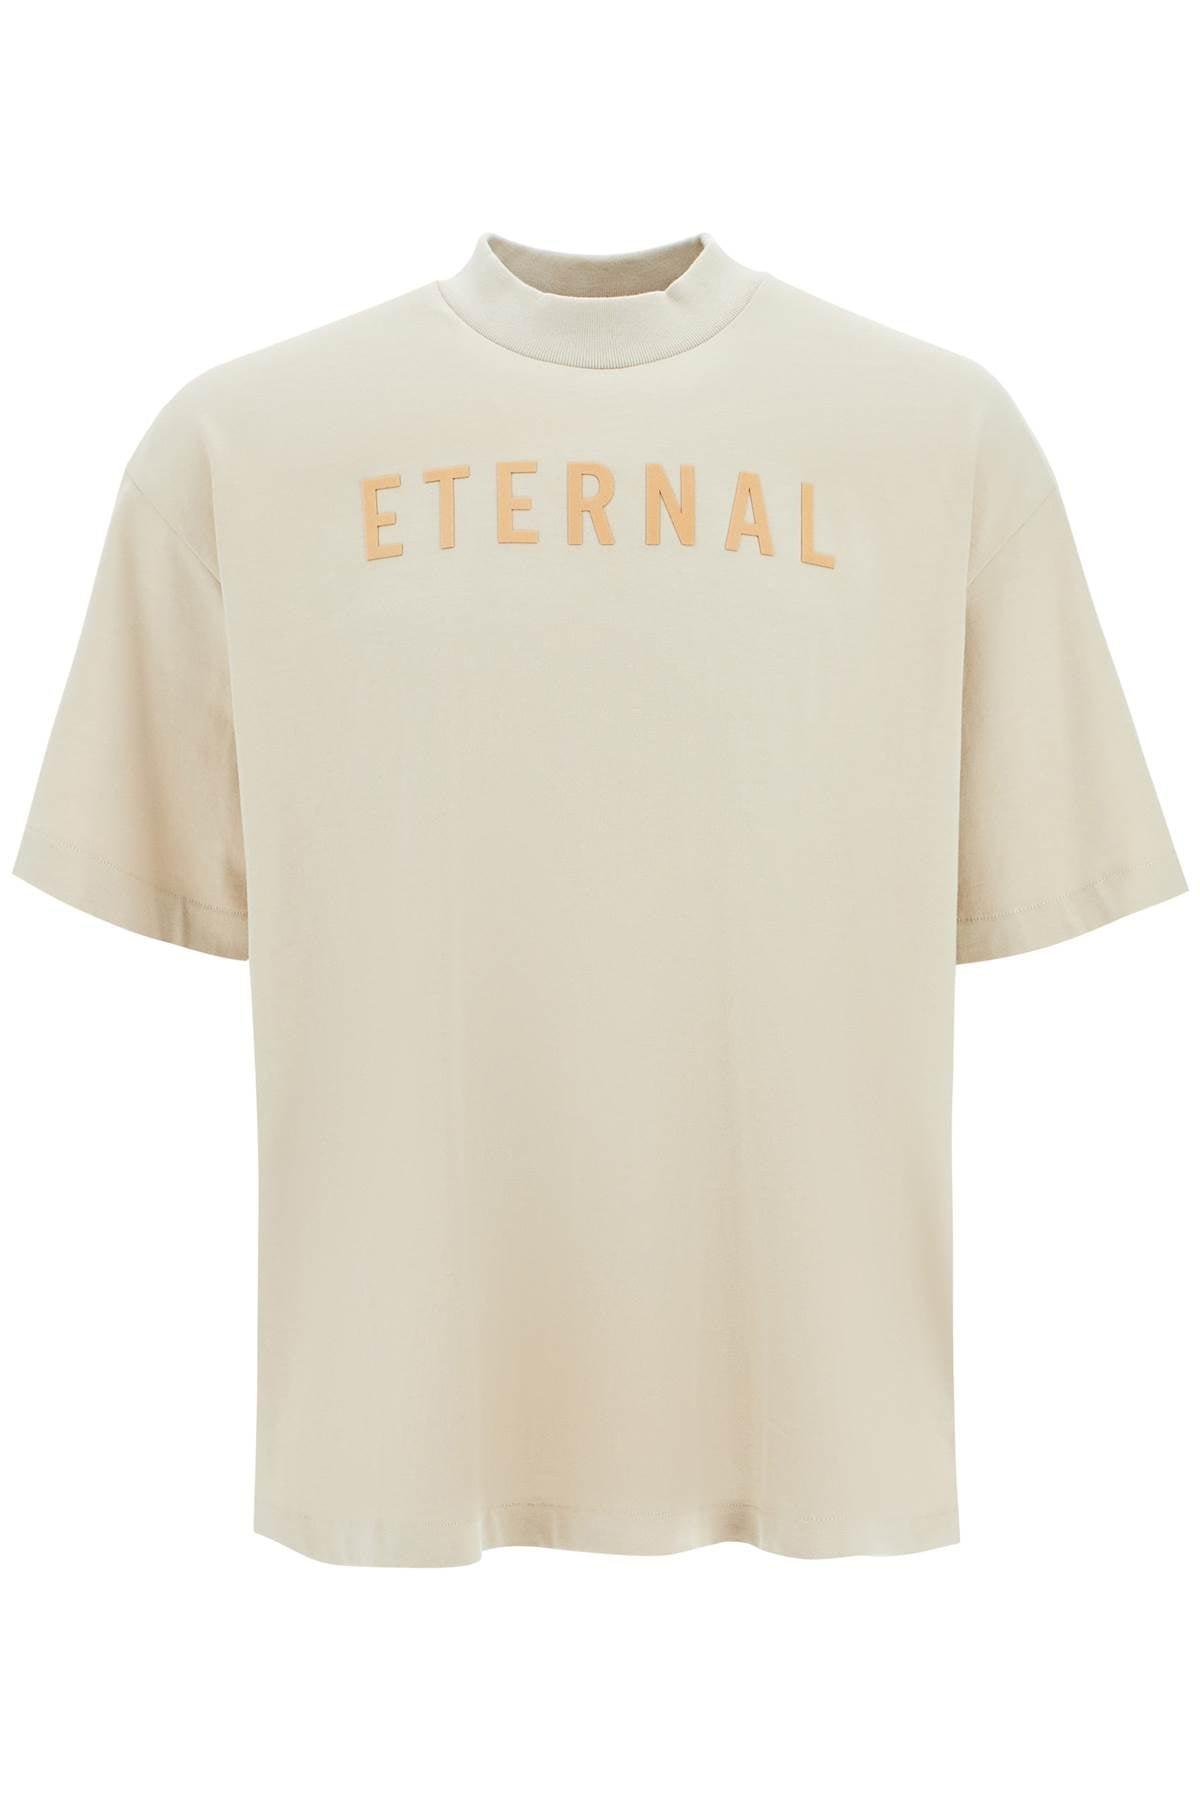 Fear Of God 'eternal' T-shirt in Natural for Men | Lyst